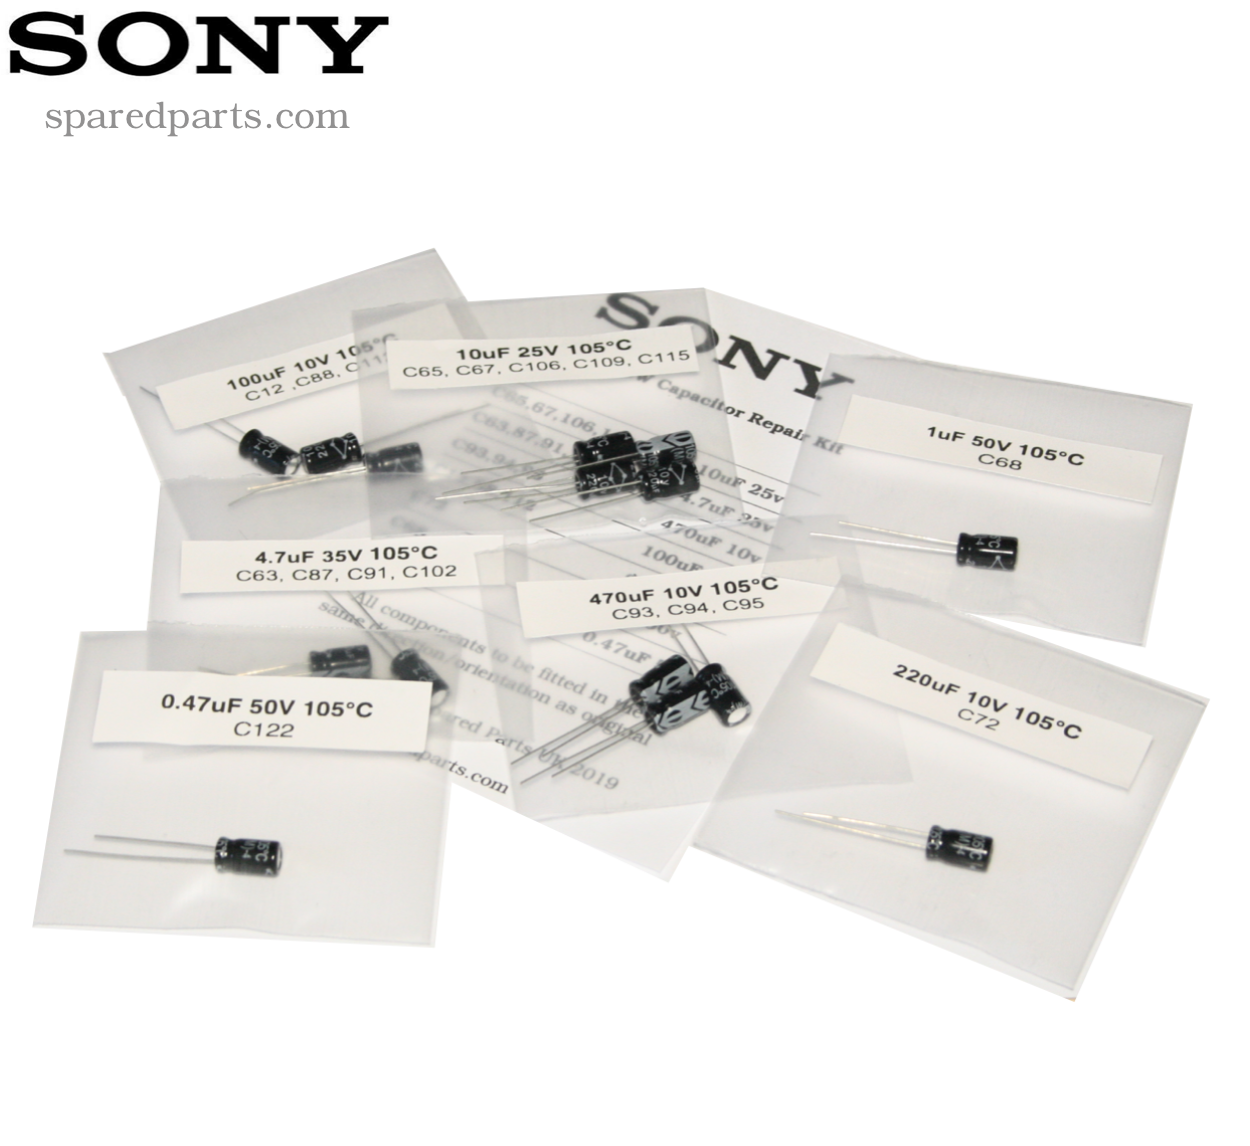 Sony ICF-5900W Capacitor Repair Kit